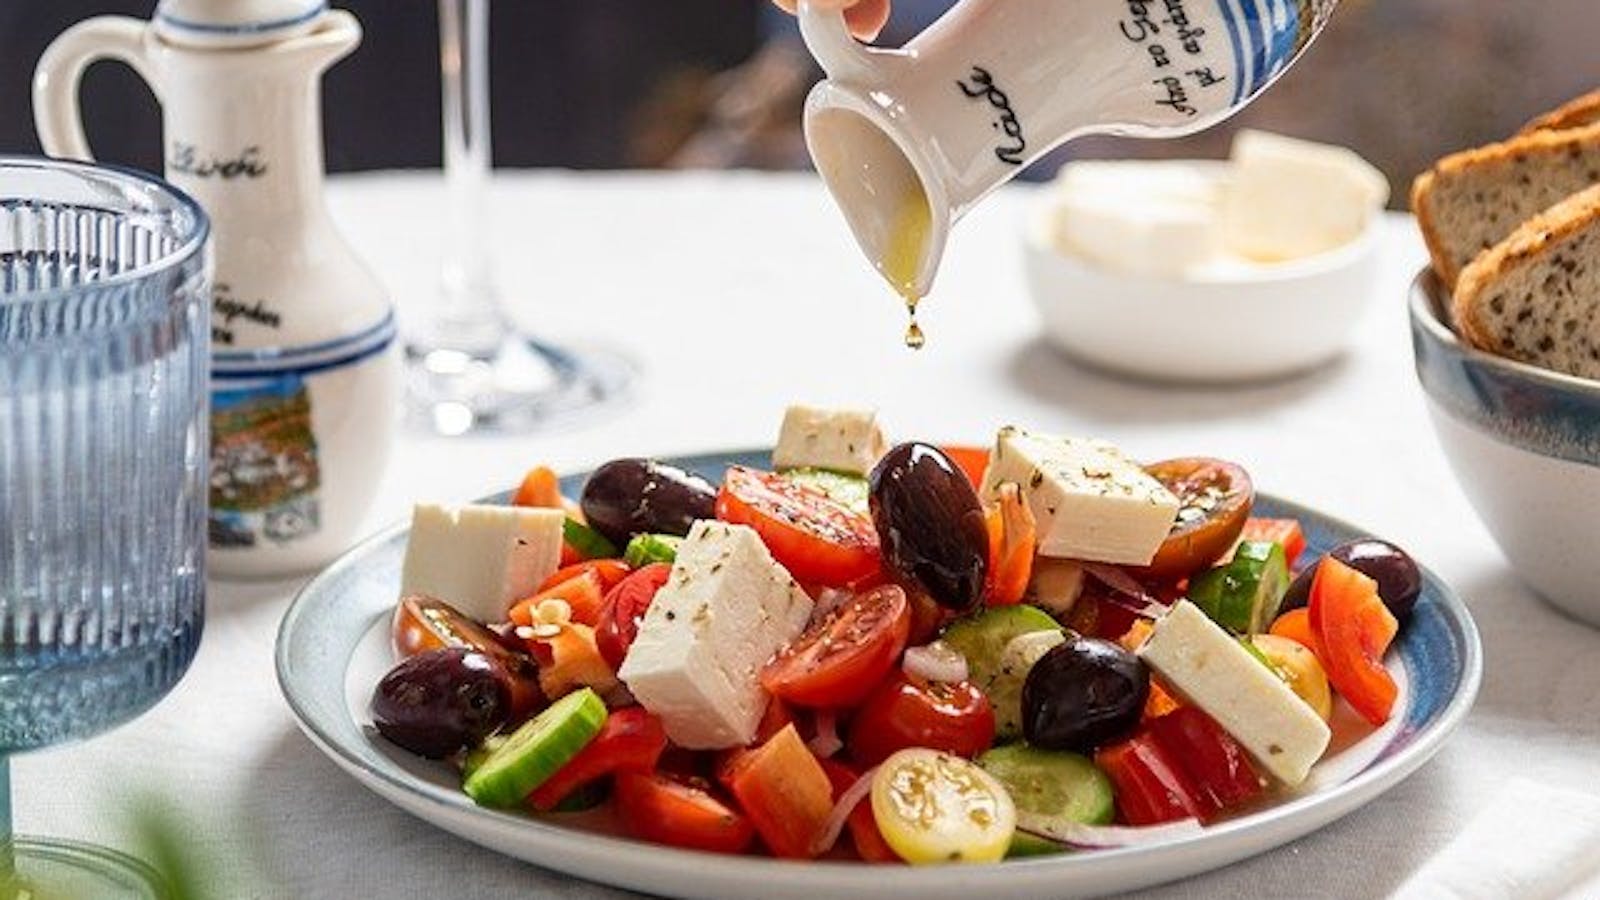 greek food essay